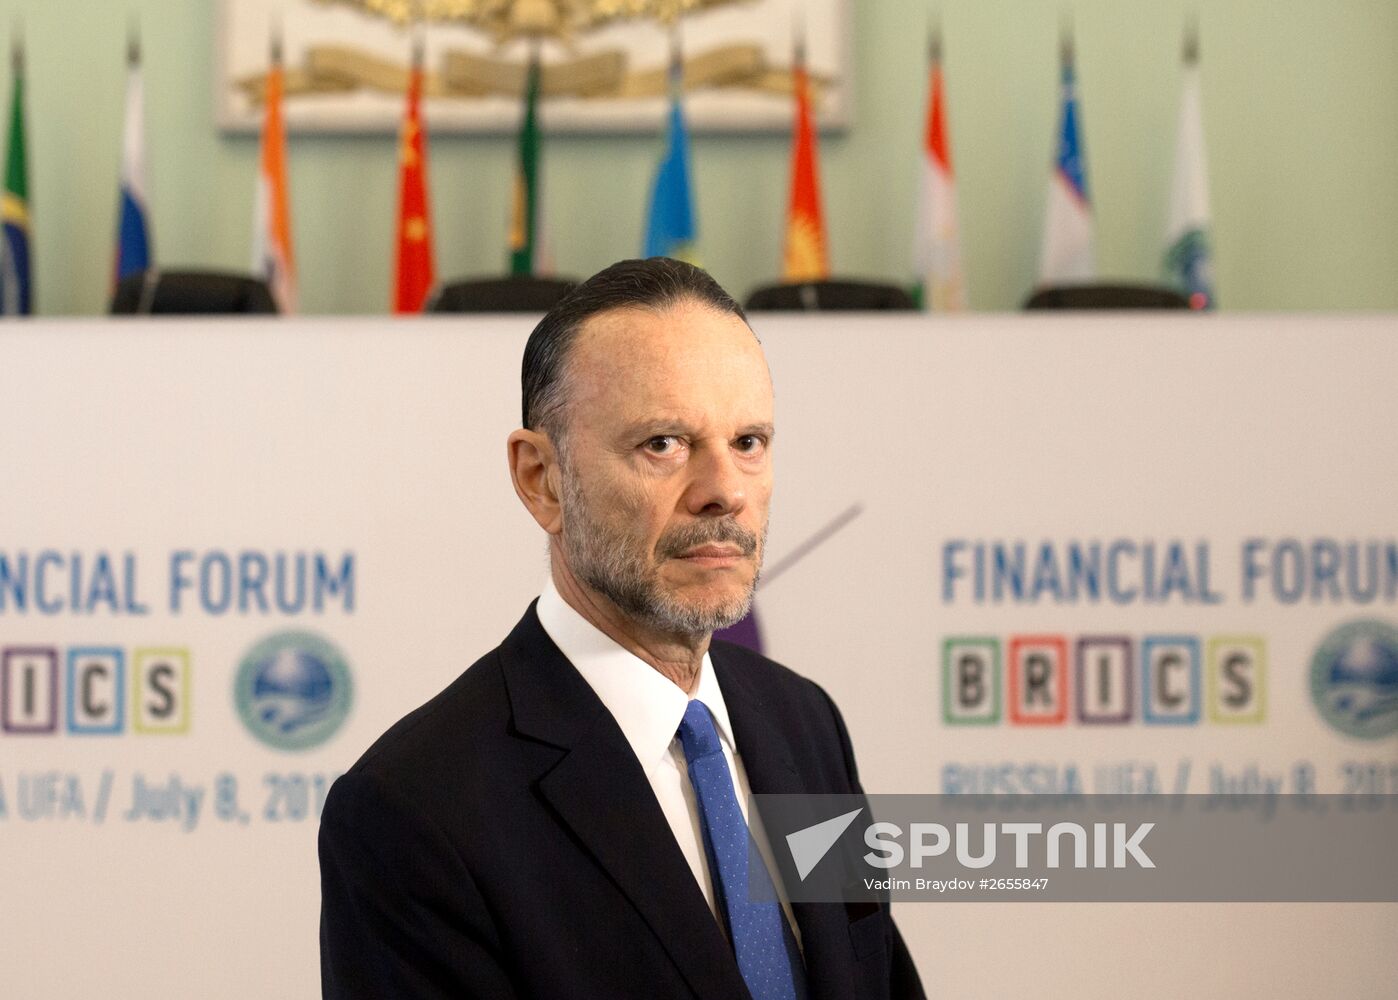 SCO and BRICS Financial Forum